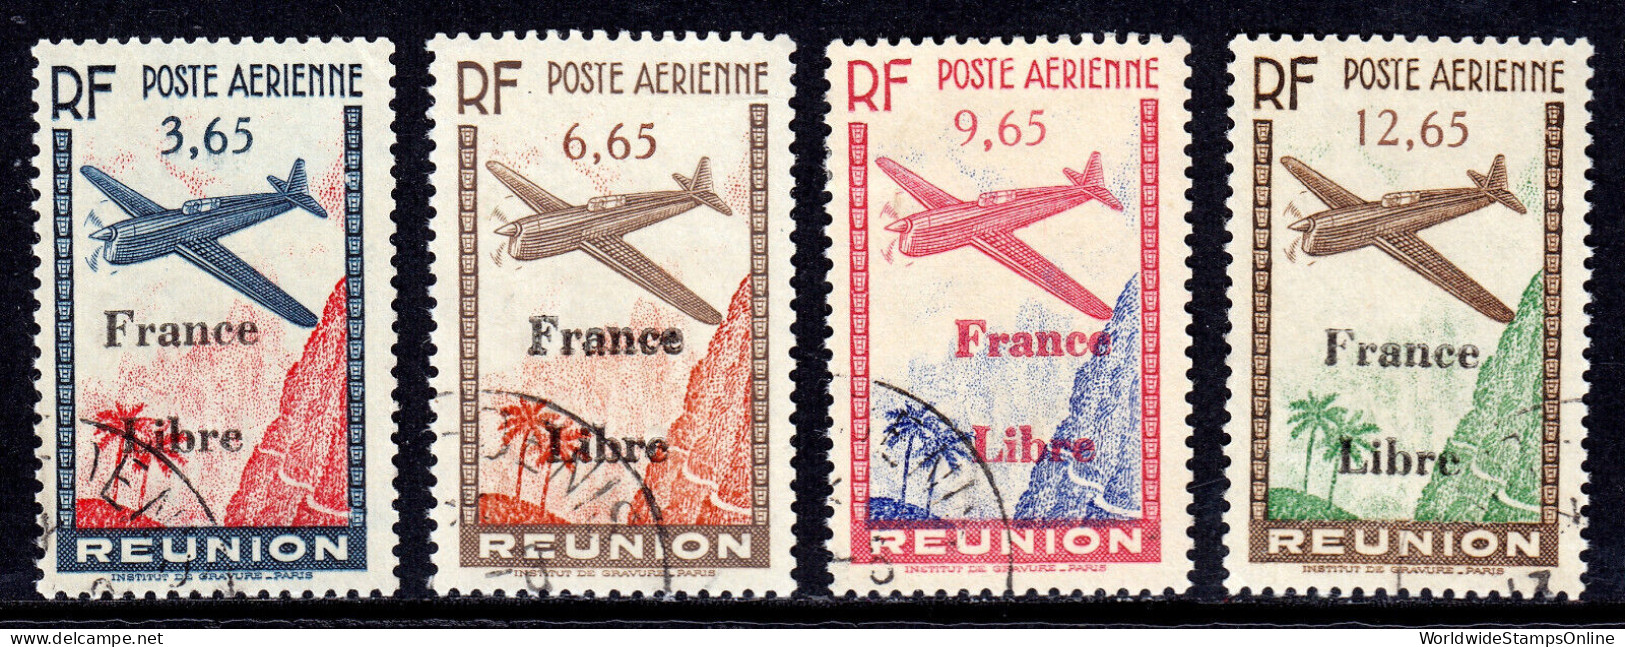 FRANCE (REUNION) — SCOTT C14-C17 — 1943 FRANCE LIBRE AIRMAIL SET— USED — SCV $22 - Luftpost